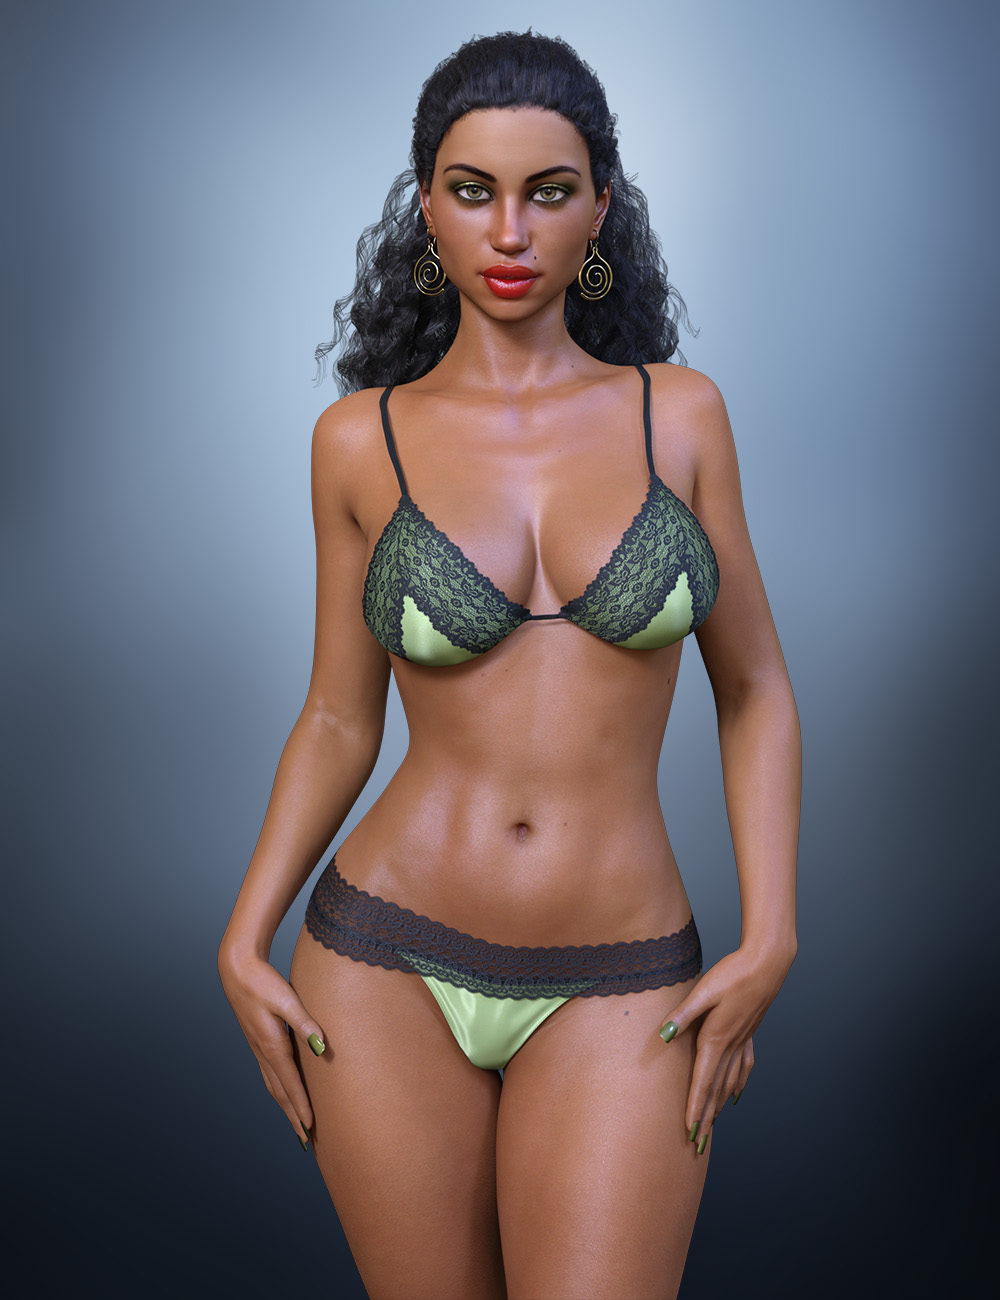 FWSA Shiloh HD for Lilith 7 by: Fred Winkler ArtSabby, 3D Models by Daz 3D